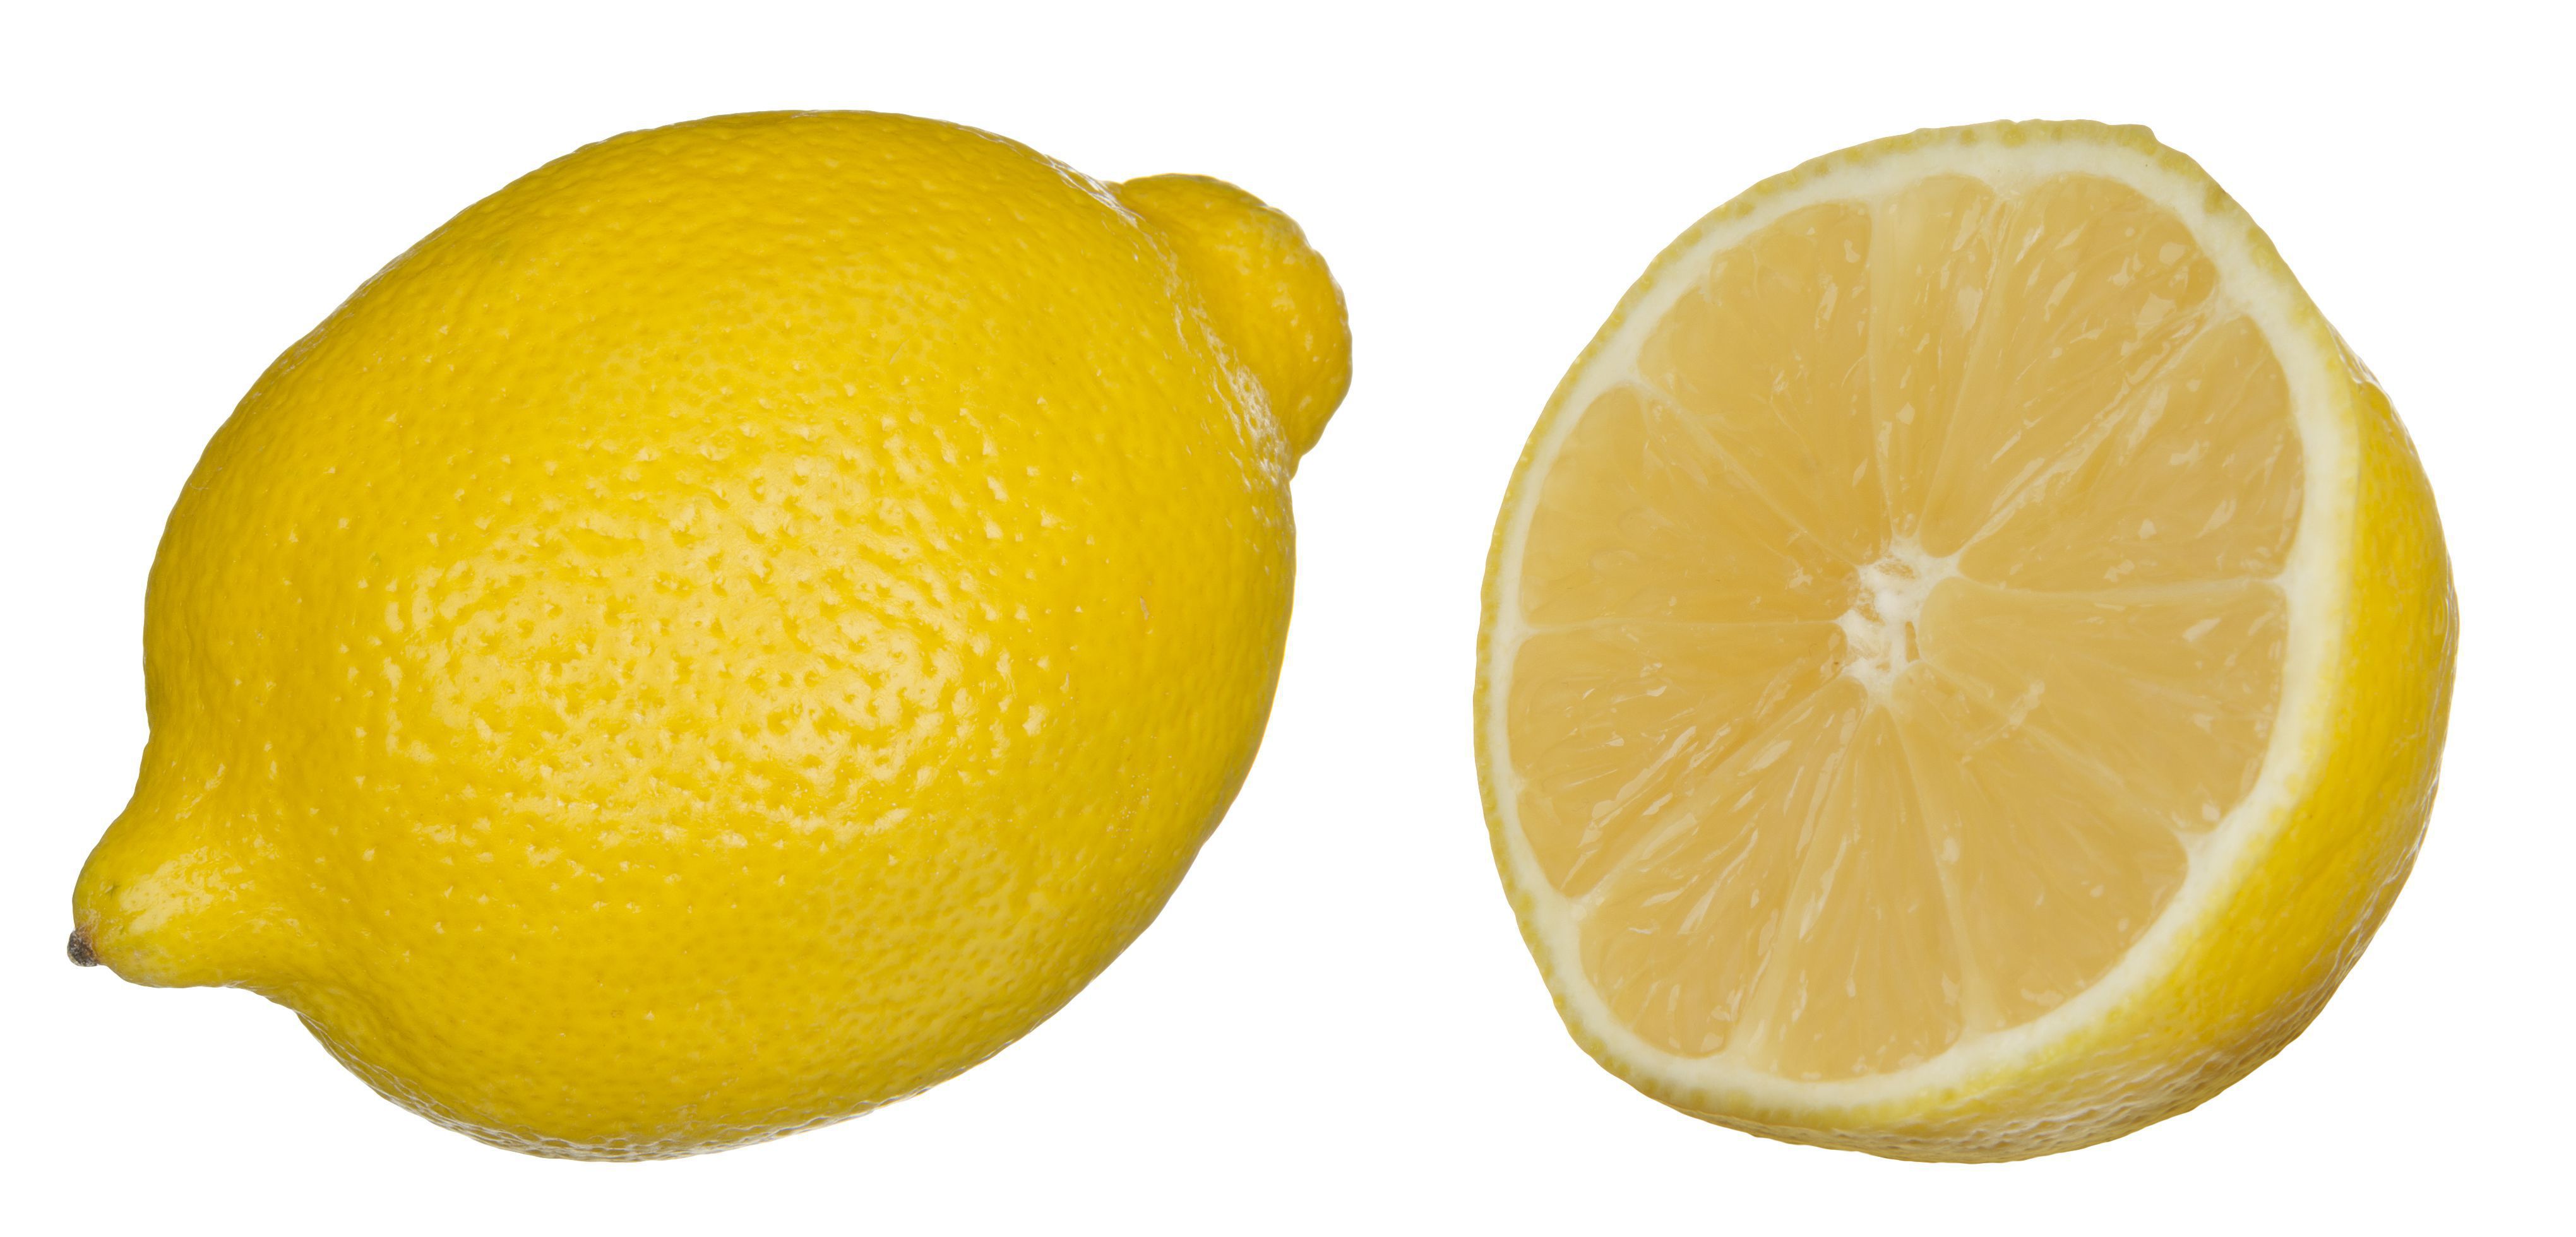 lemon wallpaper hd,citrus,lemon,persian lime,lime,meyer lemon